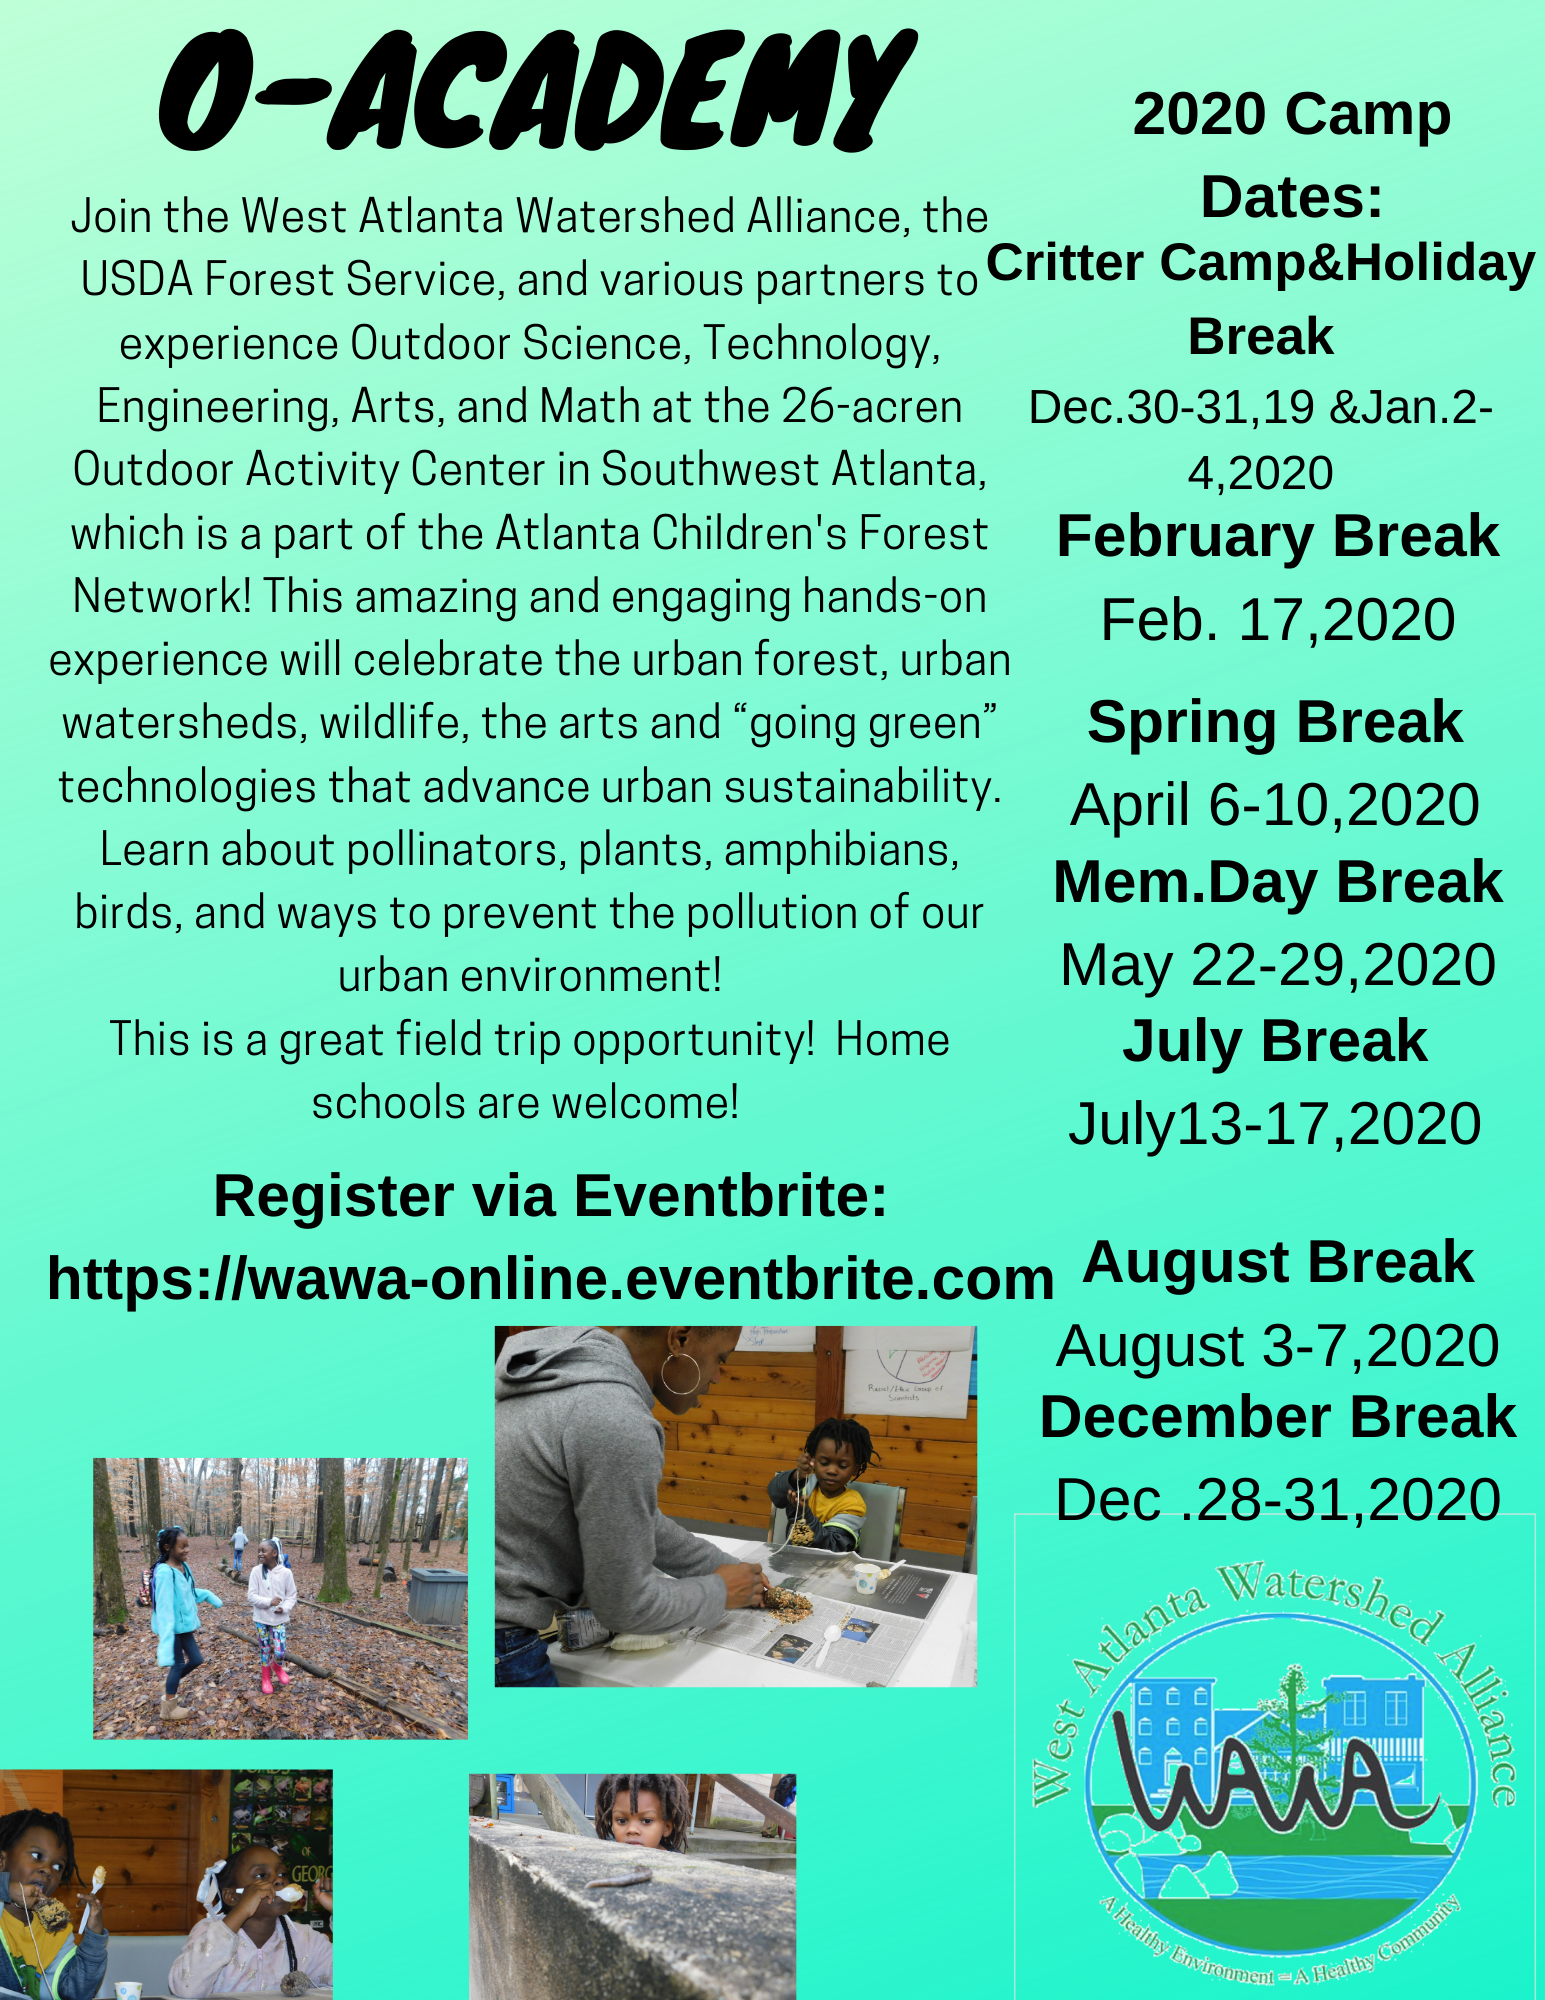 O-Academy: April SpringBreak Camp 2020